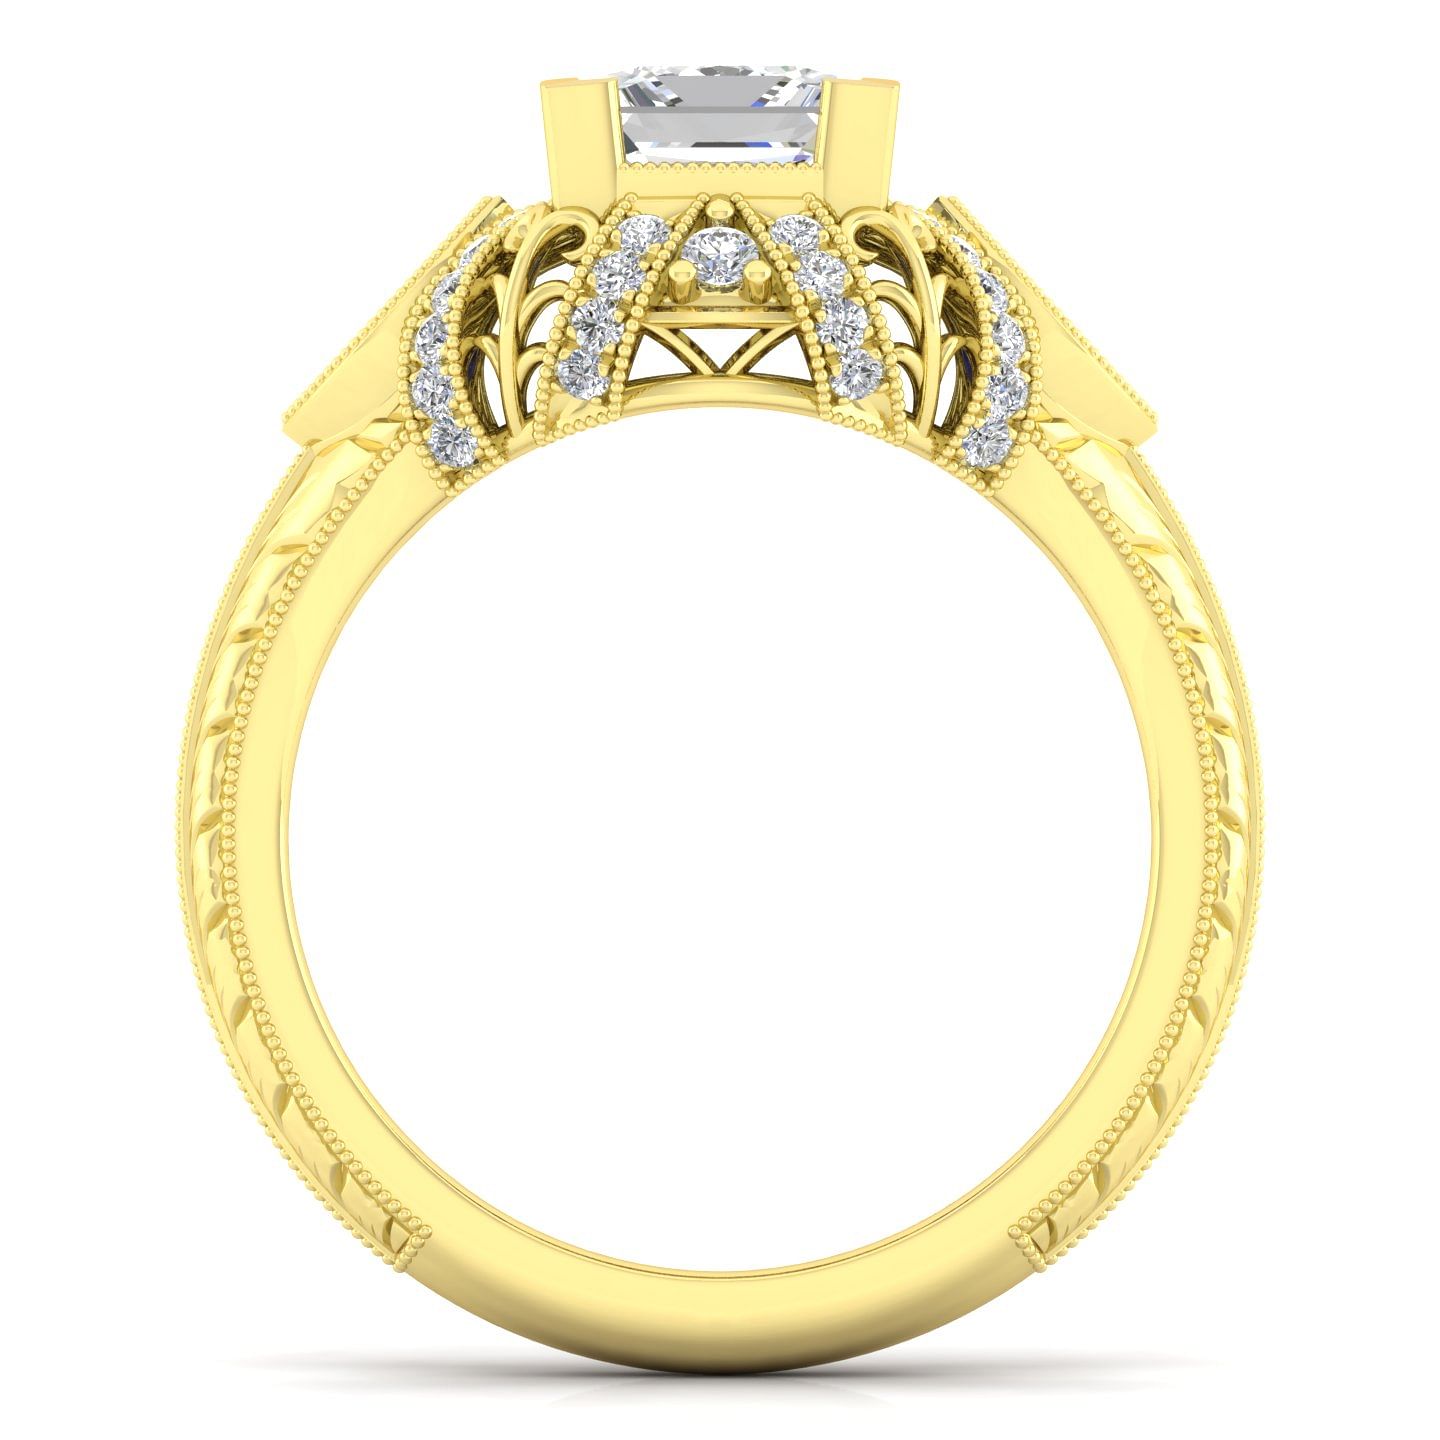 14K Yellow Gold Princess Cut Sapphire and Diamond Engagement Ring